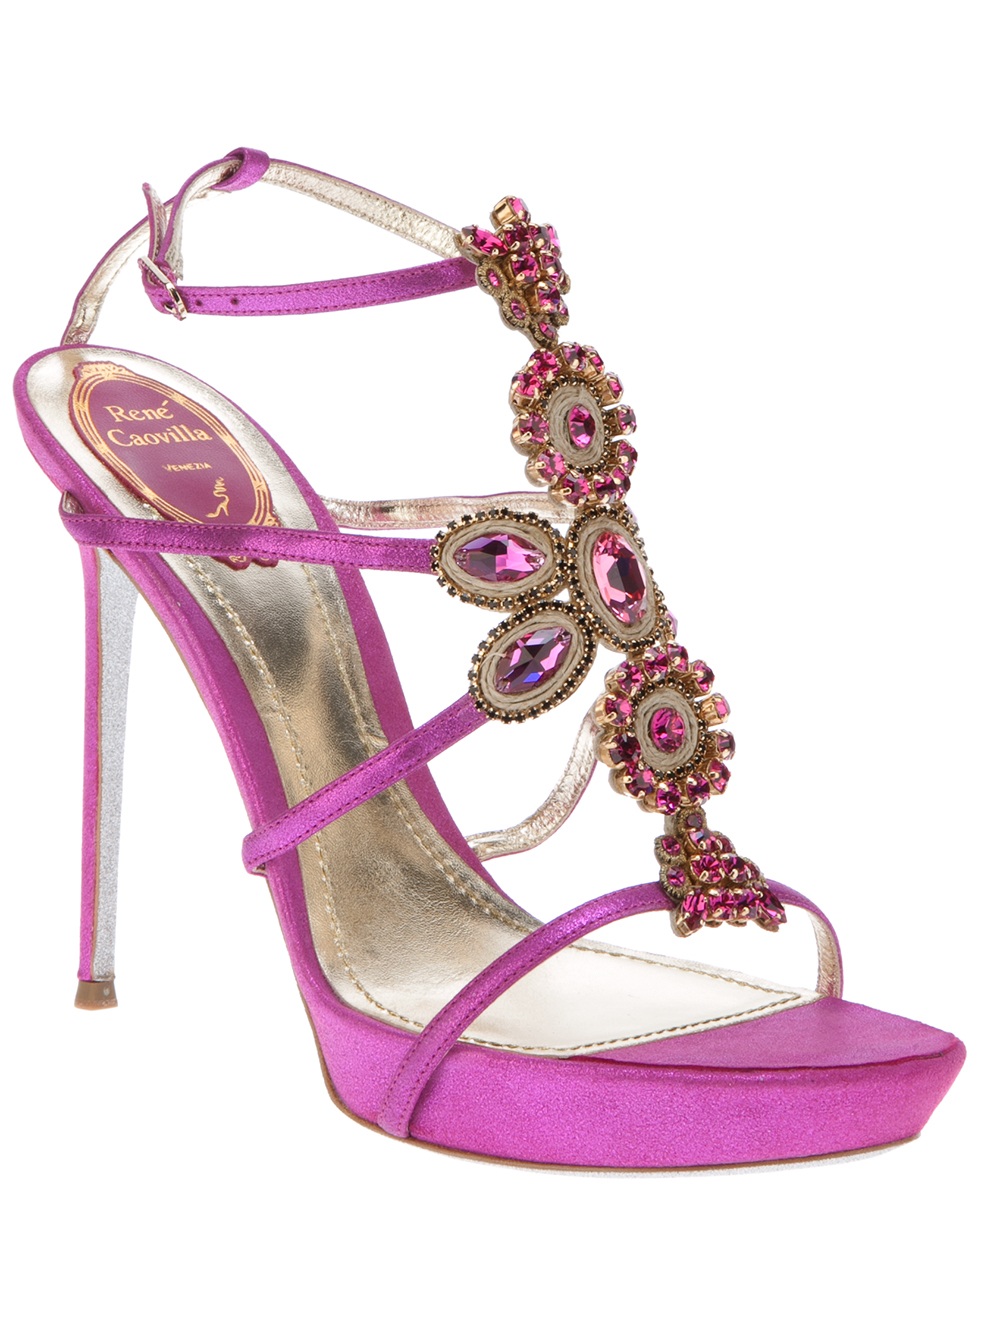 Rene caovilla Jewel Embellished Sandal in Pink | Lyst